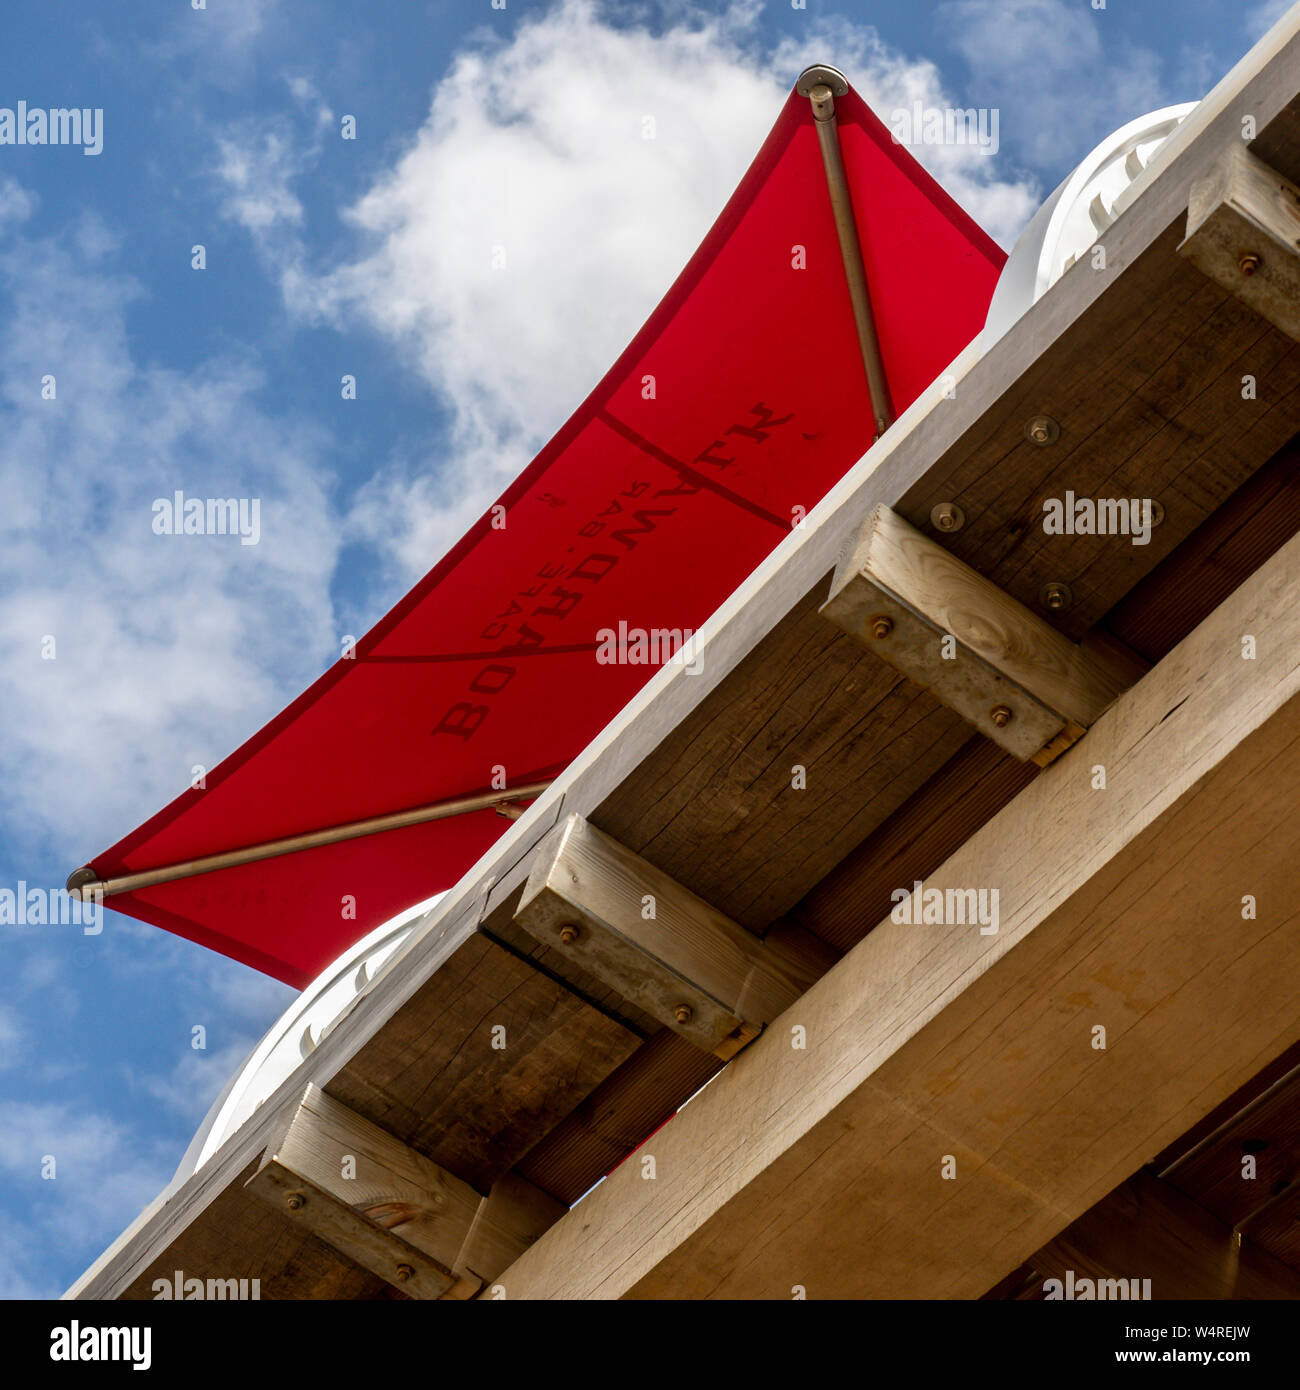 FELIXSTOWE, ESSEX, UK - JULY 18, 2018:  Large Red Umbrella against Blue Sky on the Pier Stock Photo